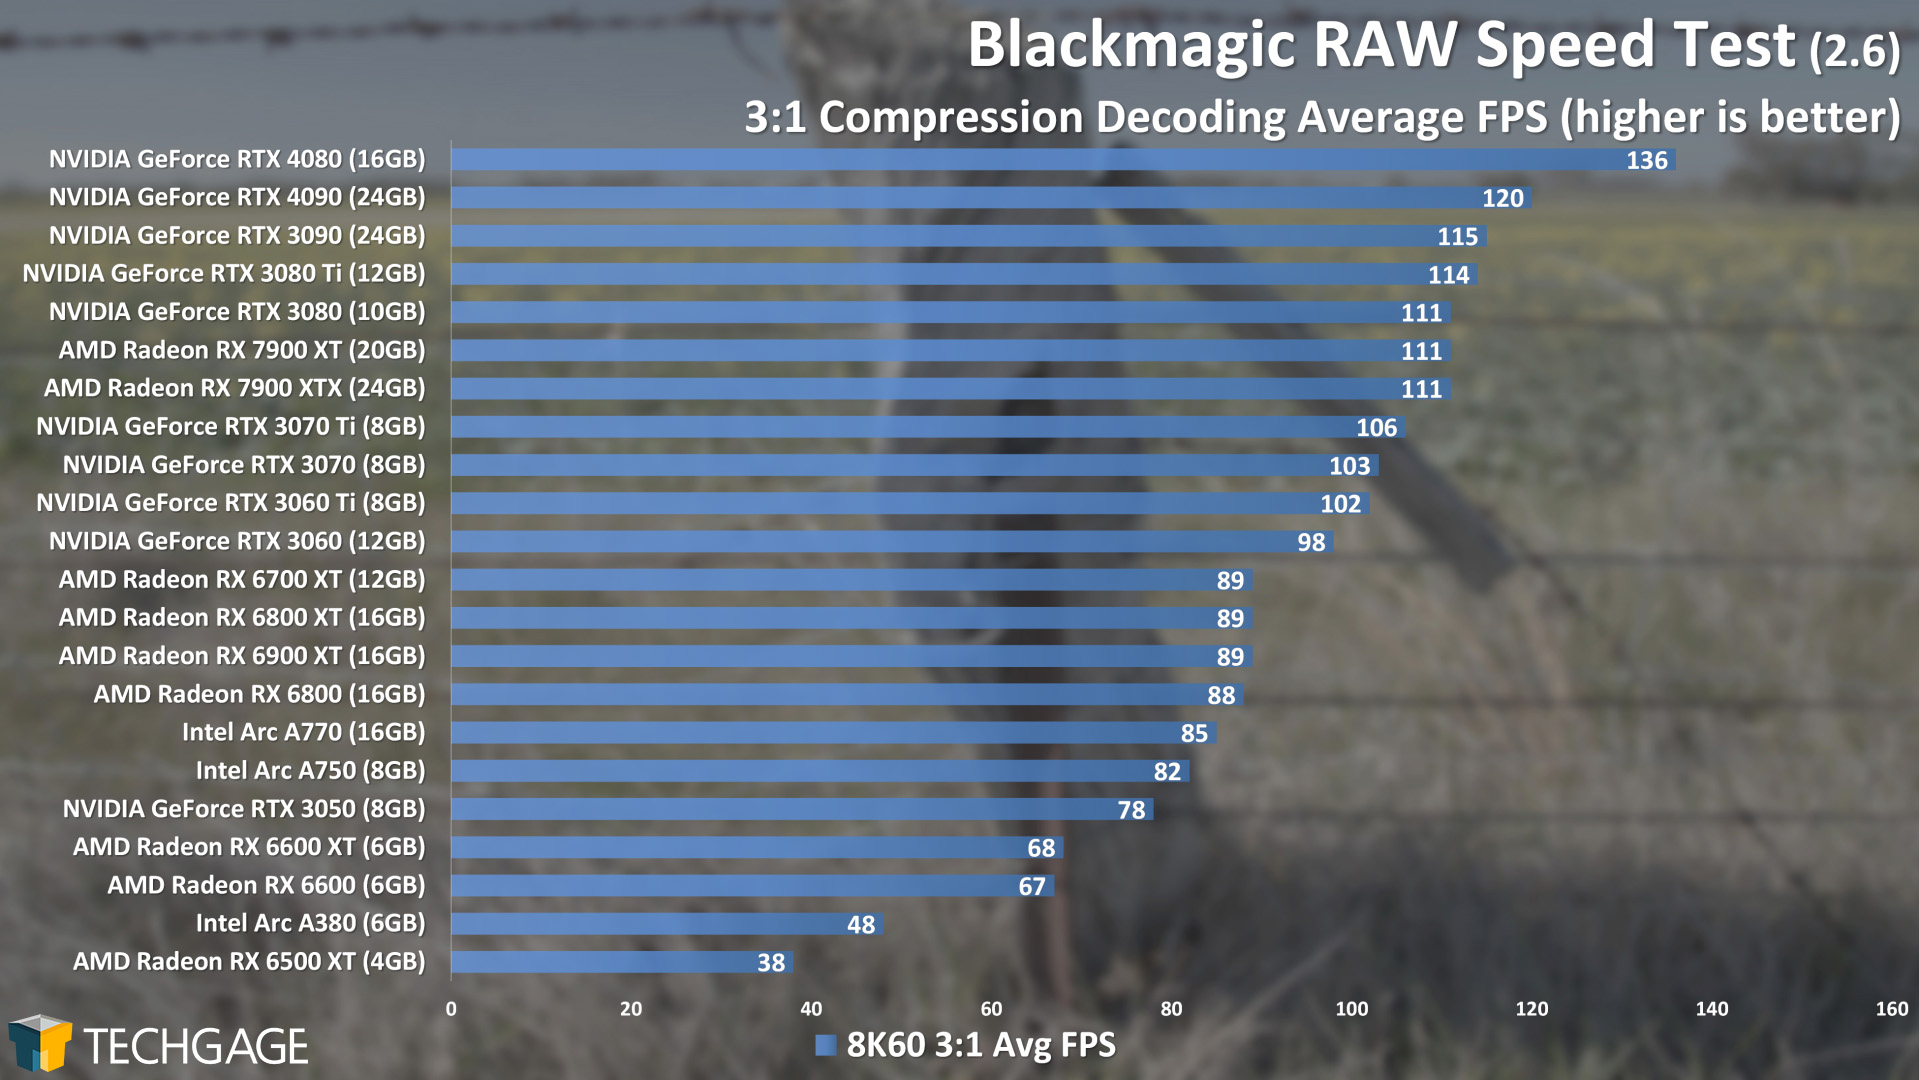 BRAW Speed Test 3-1 Compression Performance (AMD Radeon RX 7900 XT and XTX)